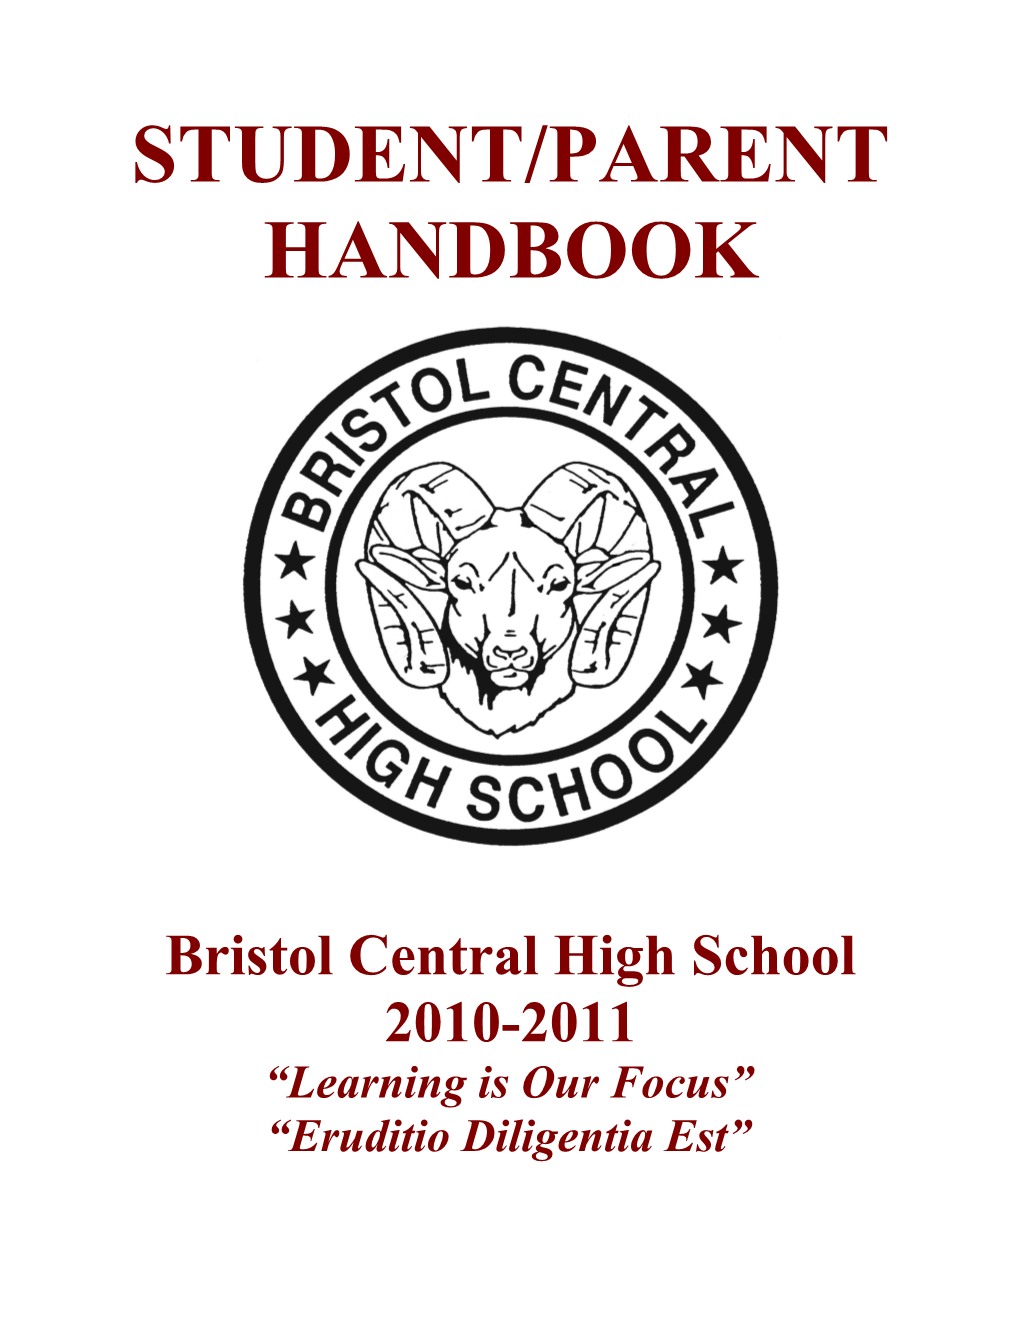 Bristol Central High School